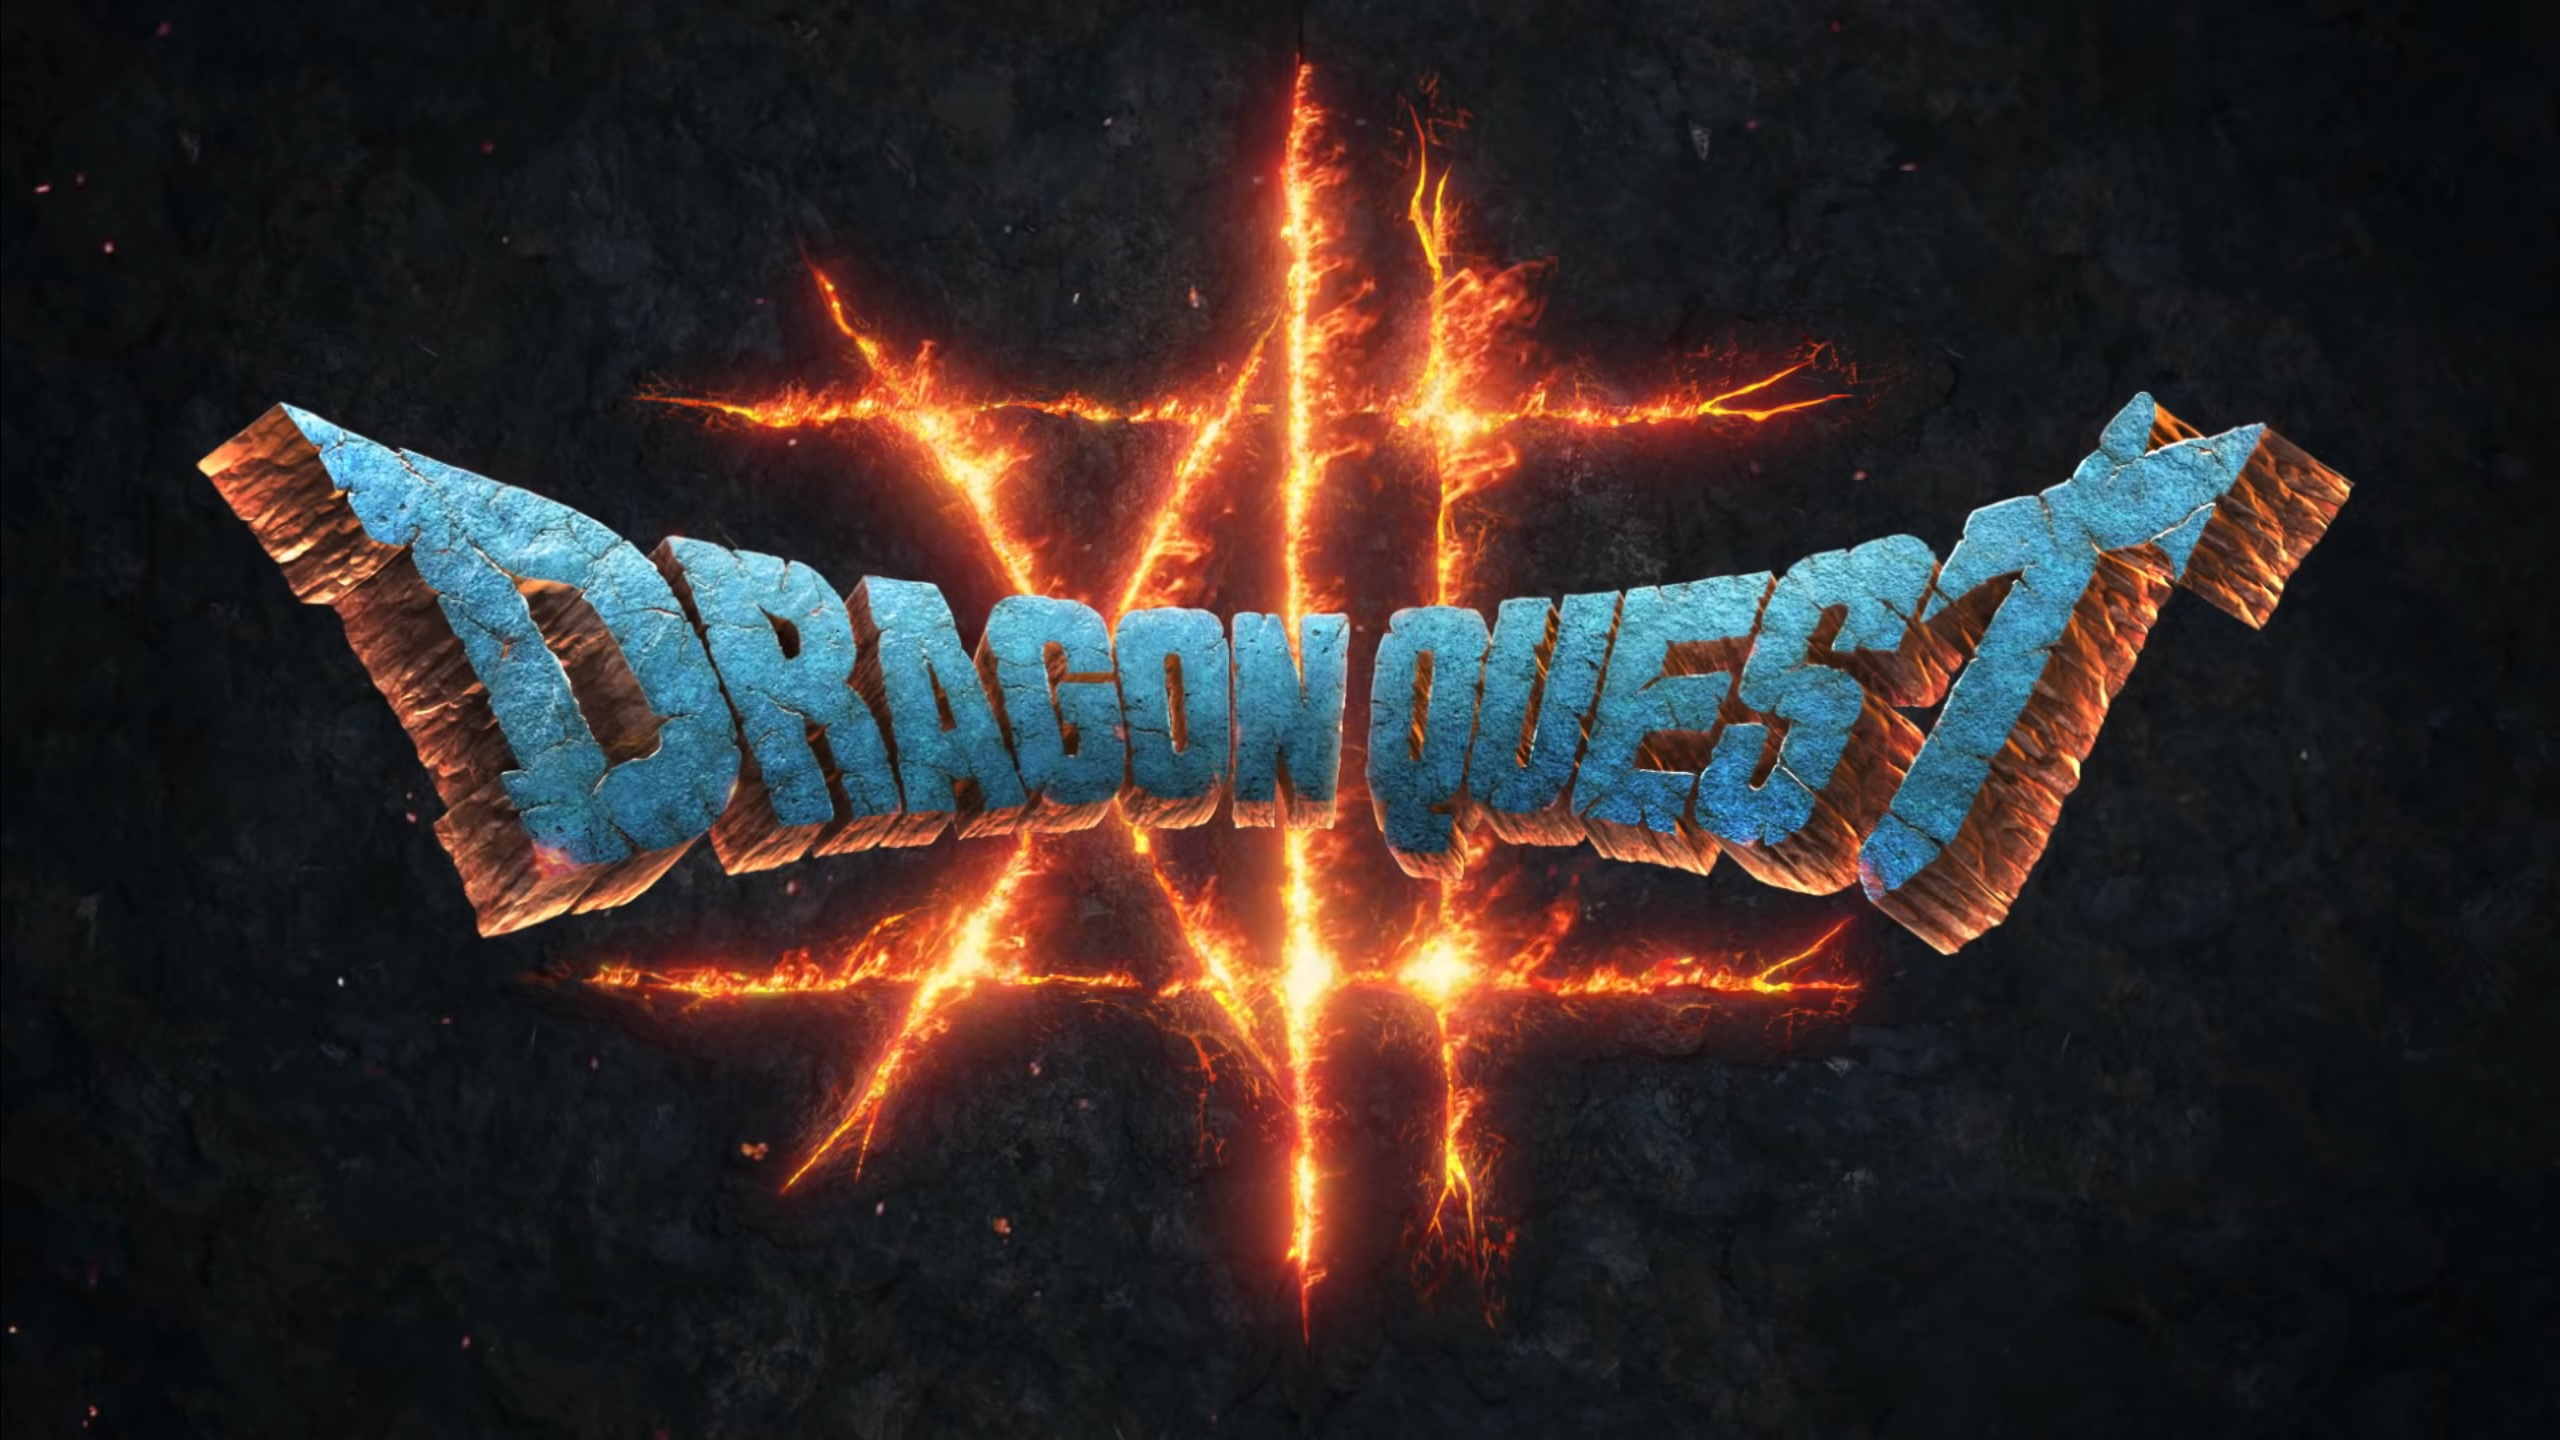 Dragon Quest XII: The Flames of Fate officieel aangekondigd met teaser